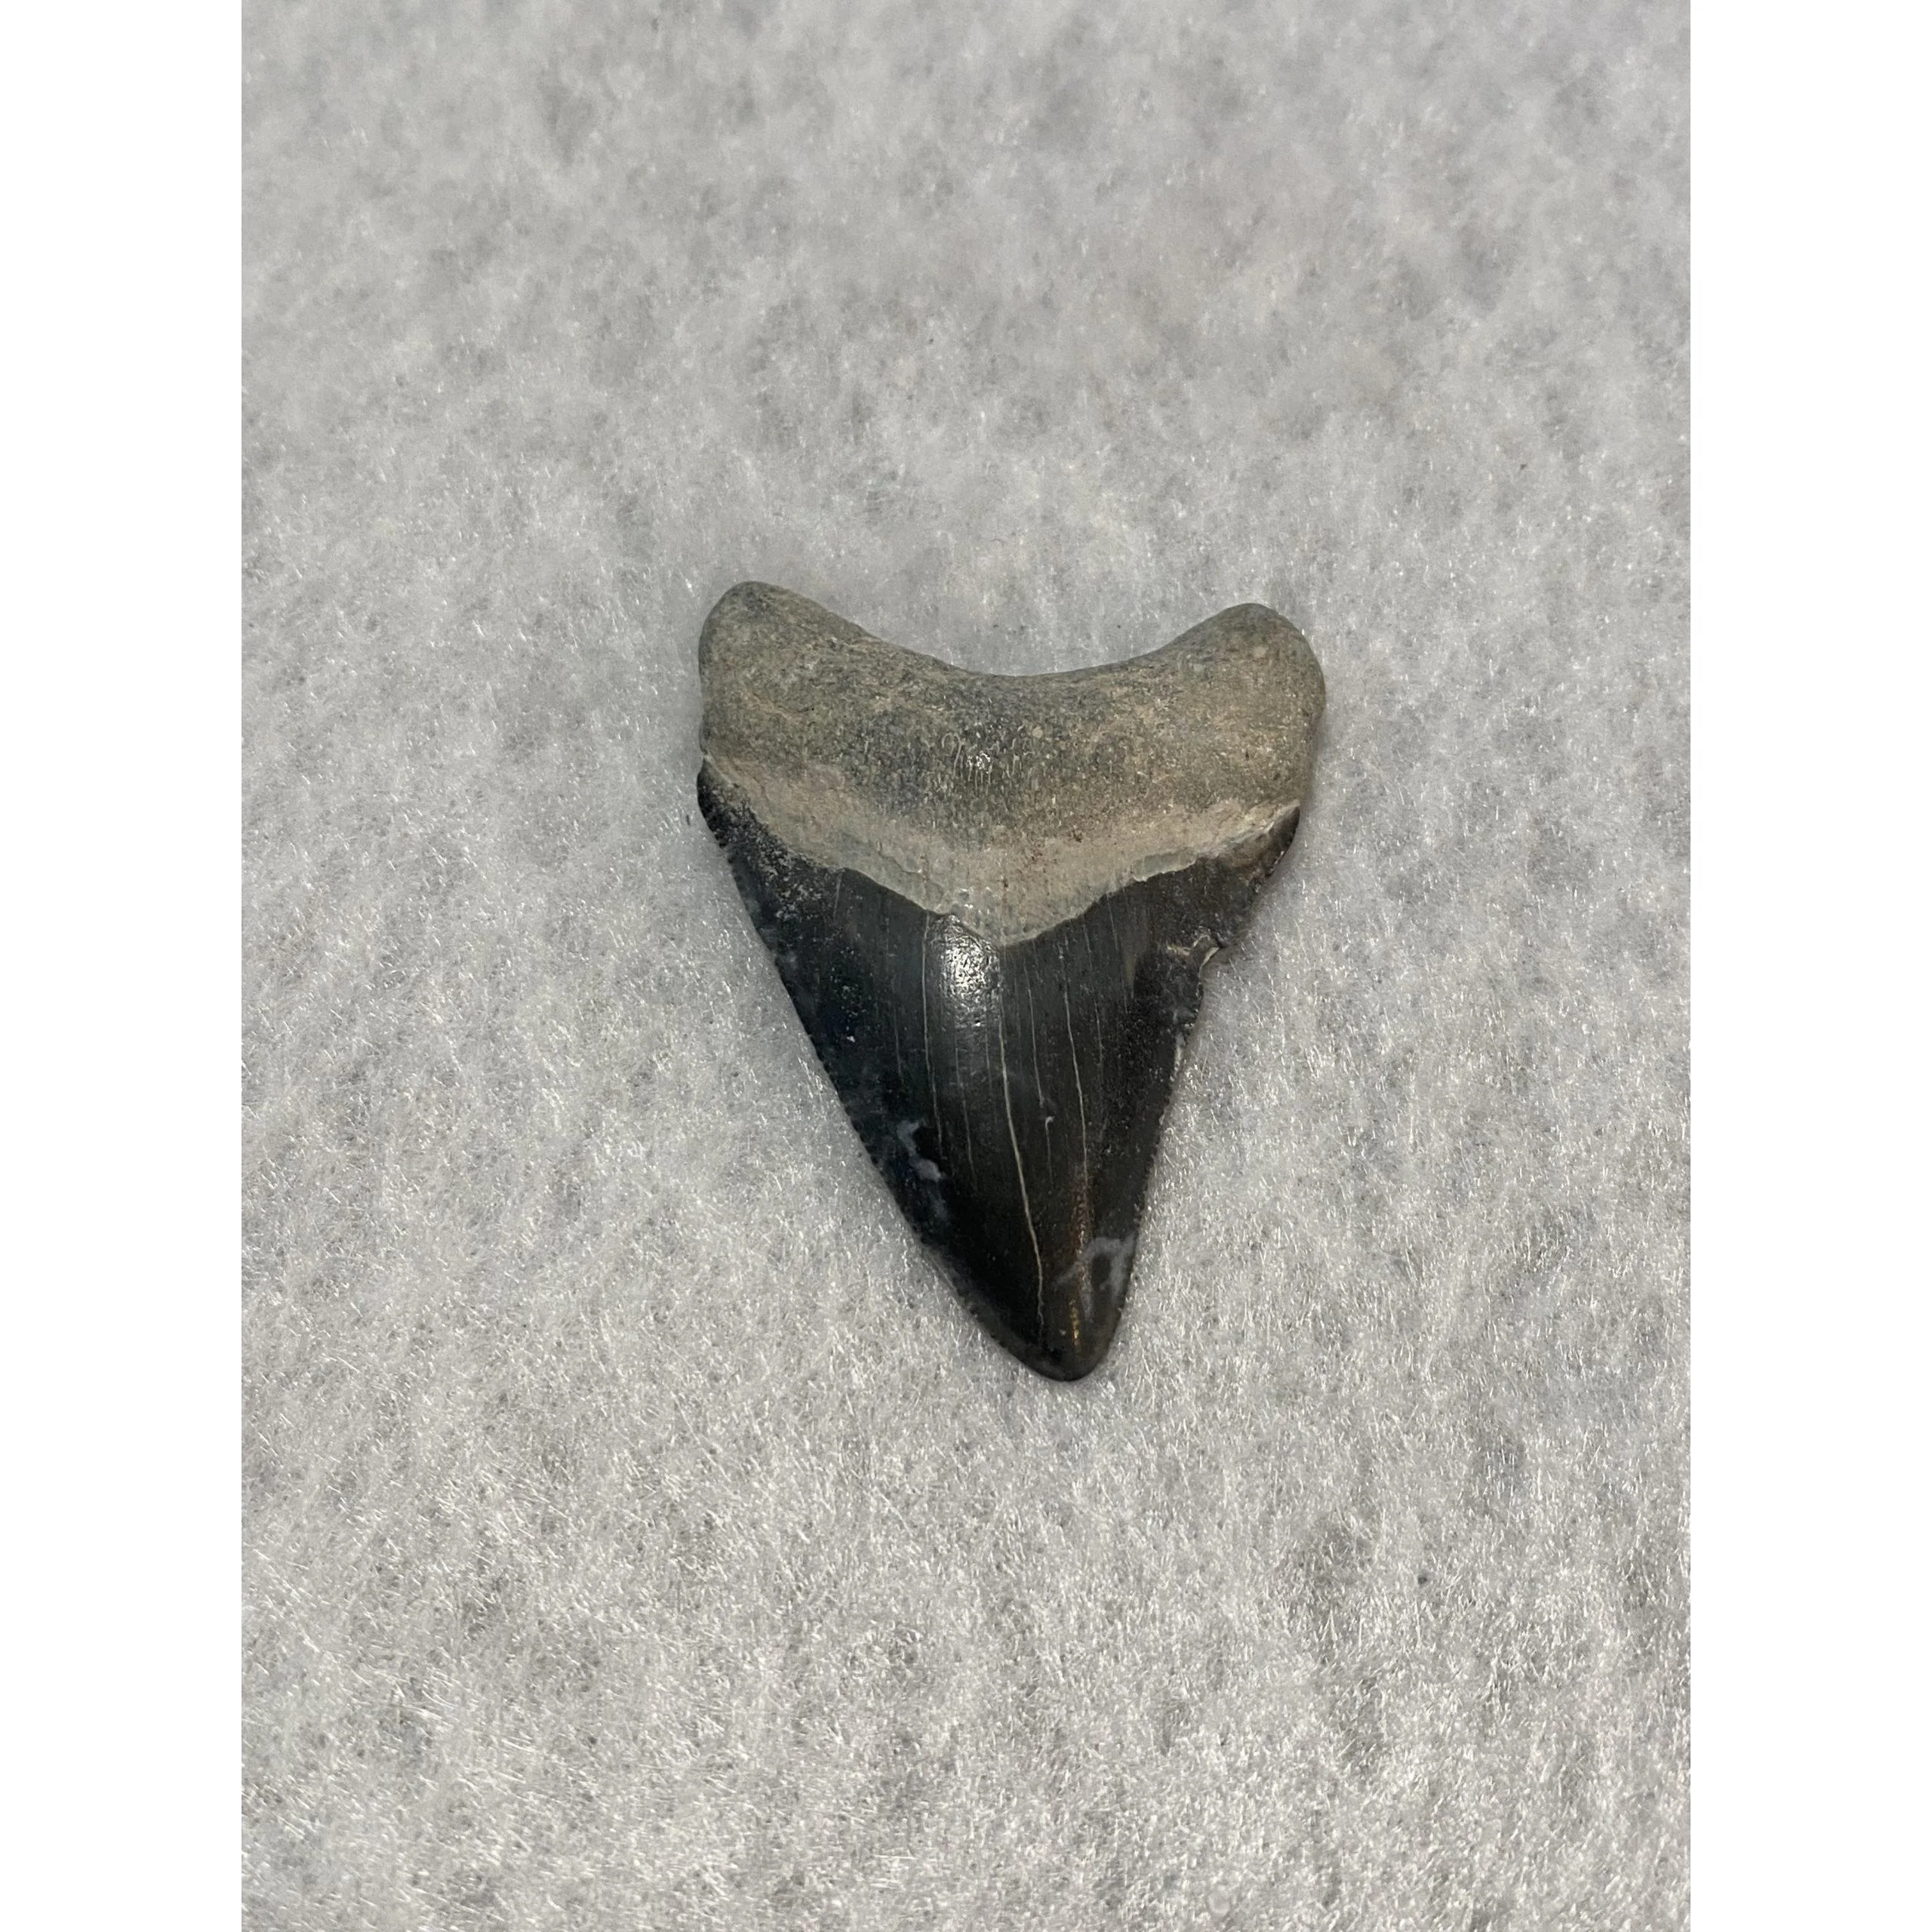 Megalodon Tooth, Bone Valley, Florida, 2.16 inch Prehistoric Online